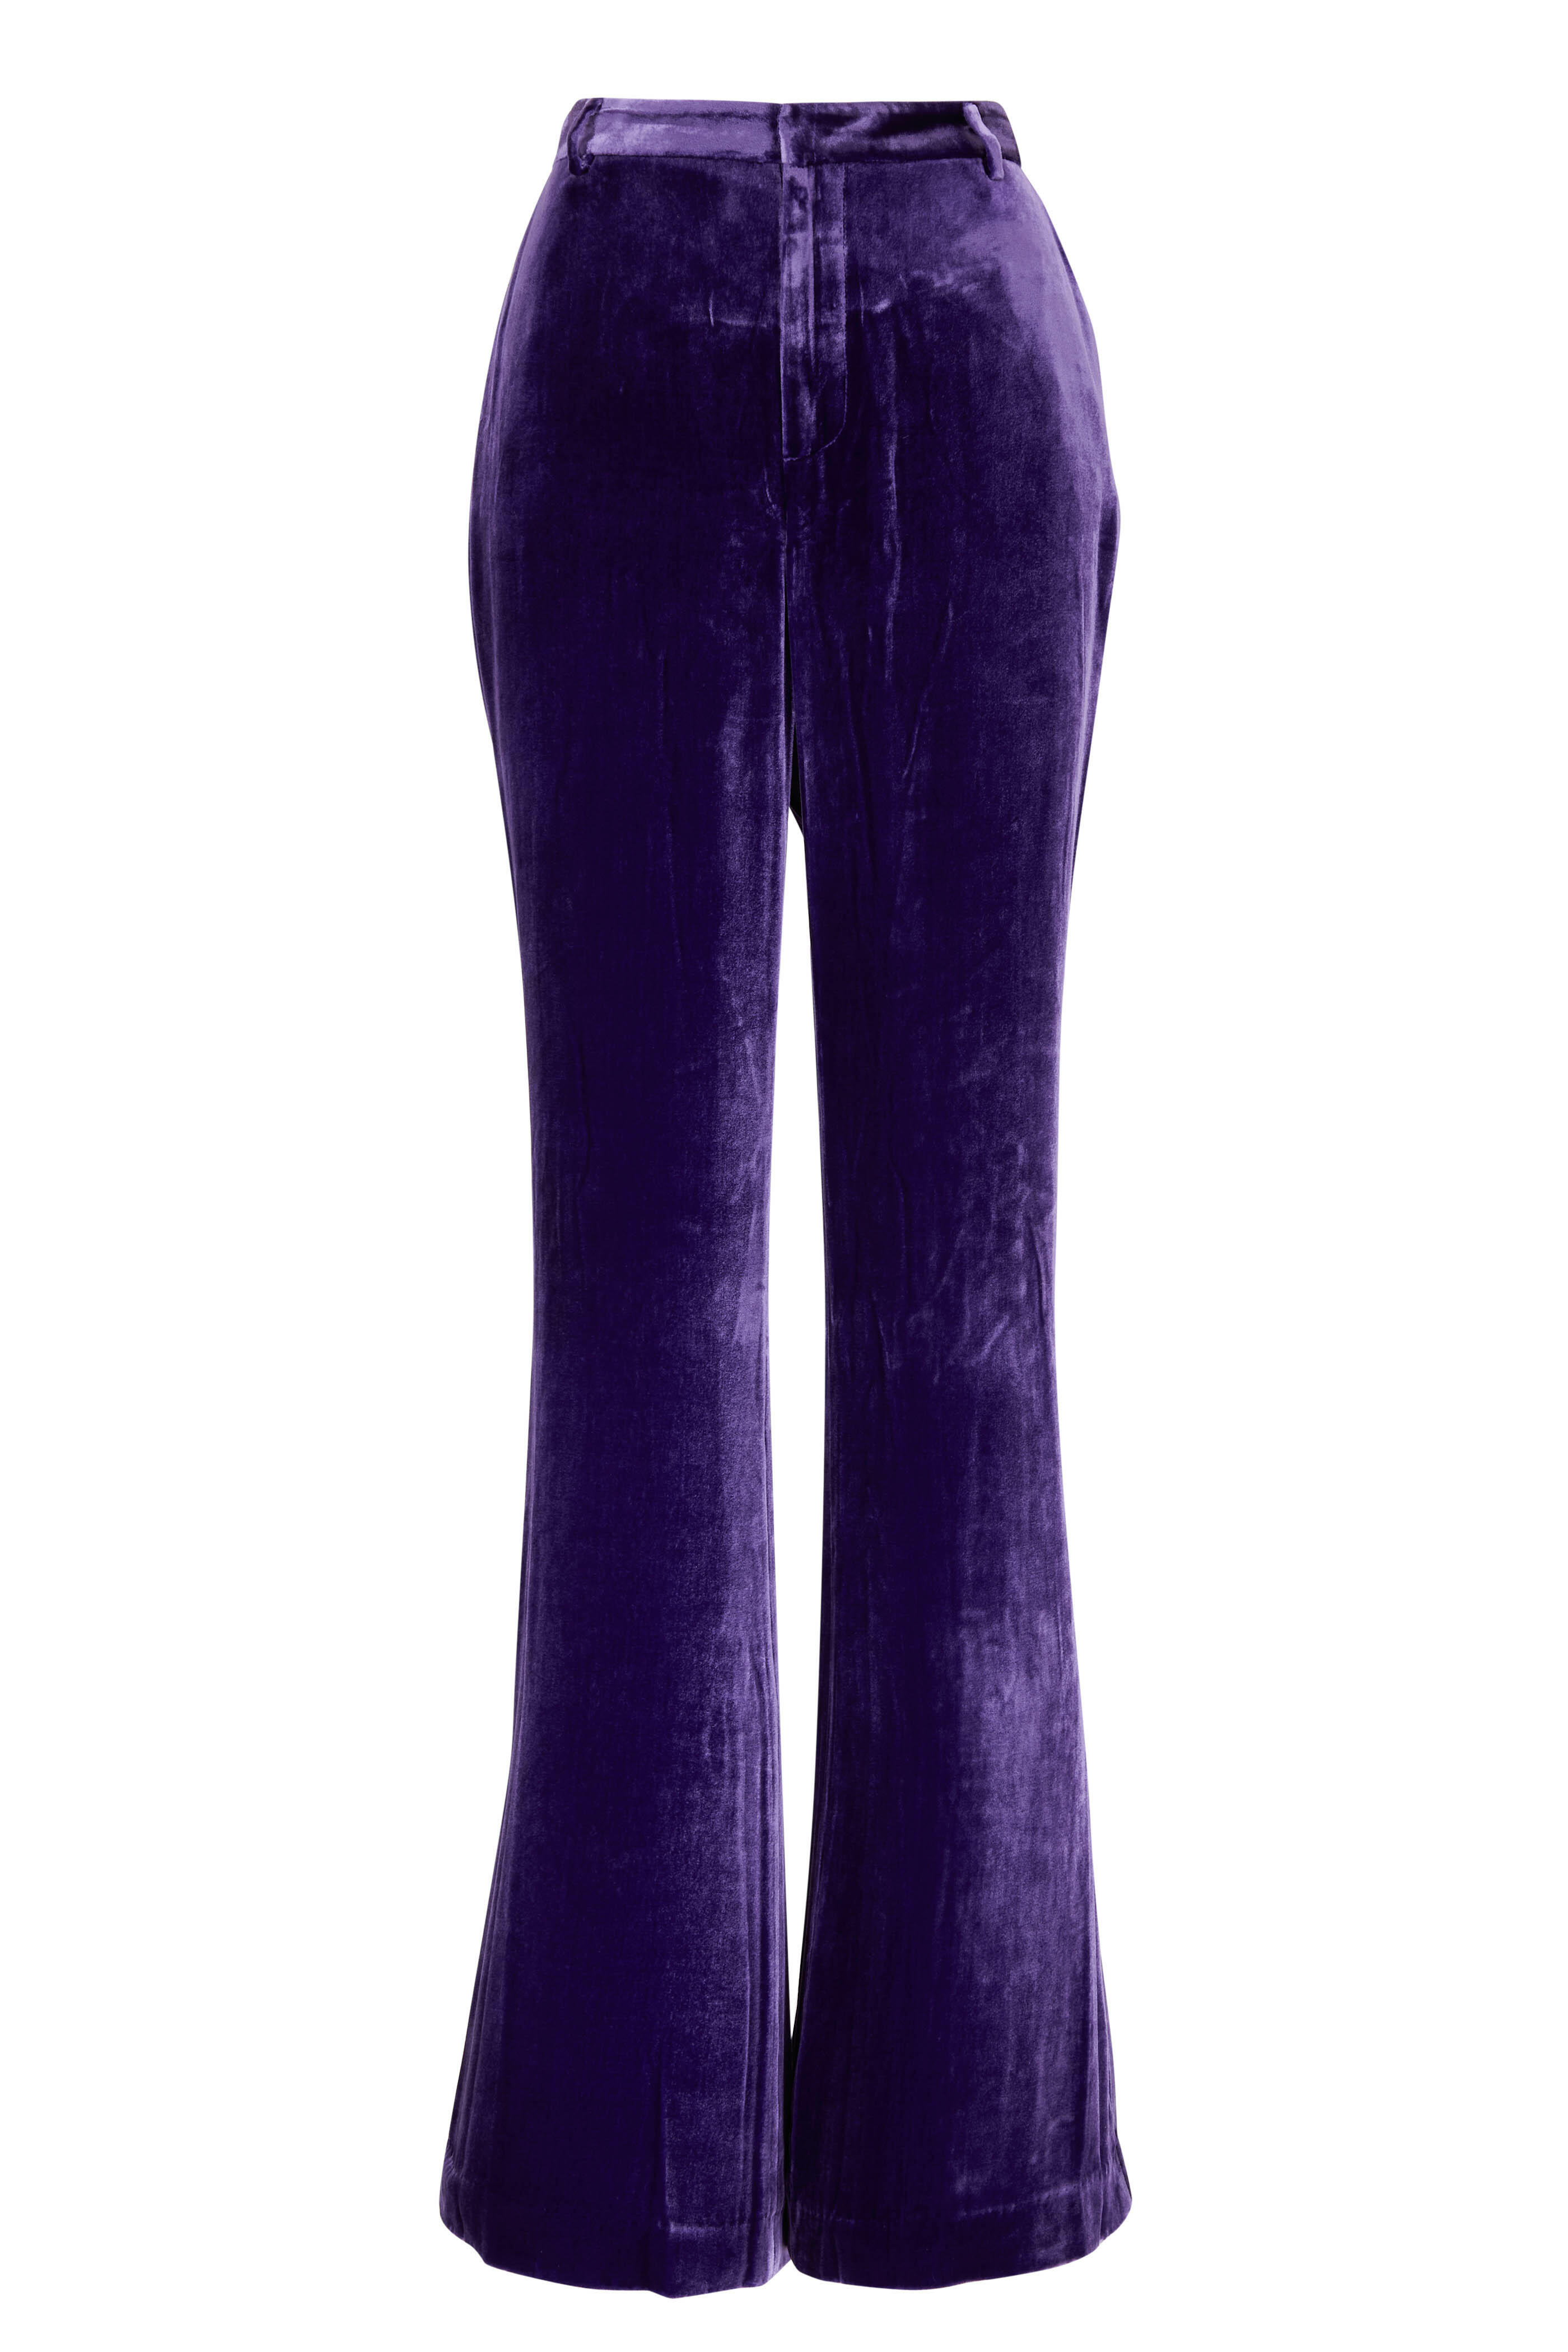 L'Agence - Lane Deep Violet Velvet Flare Pant